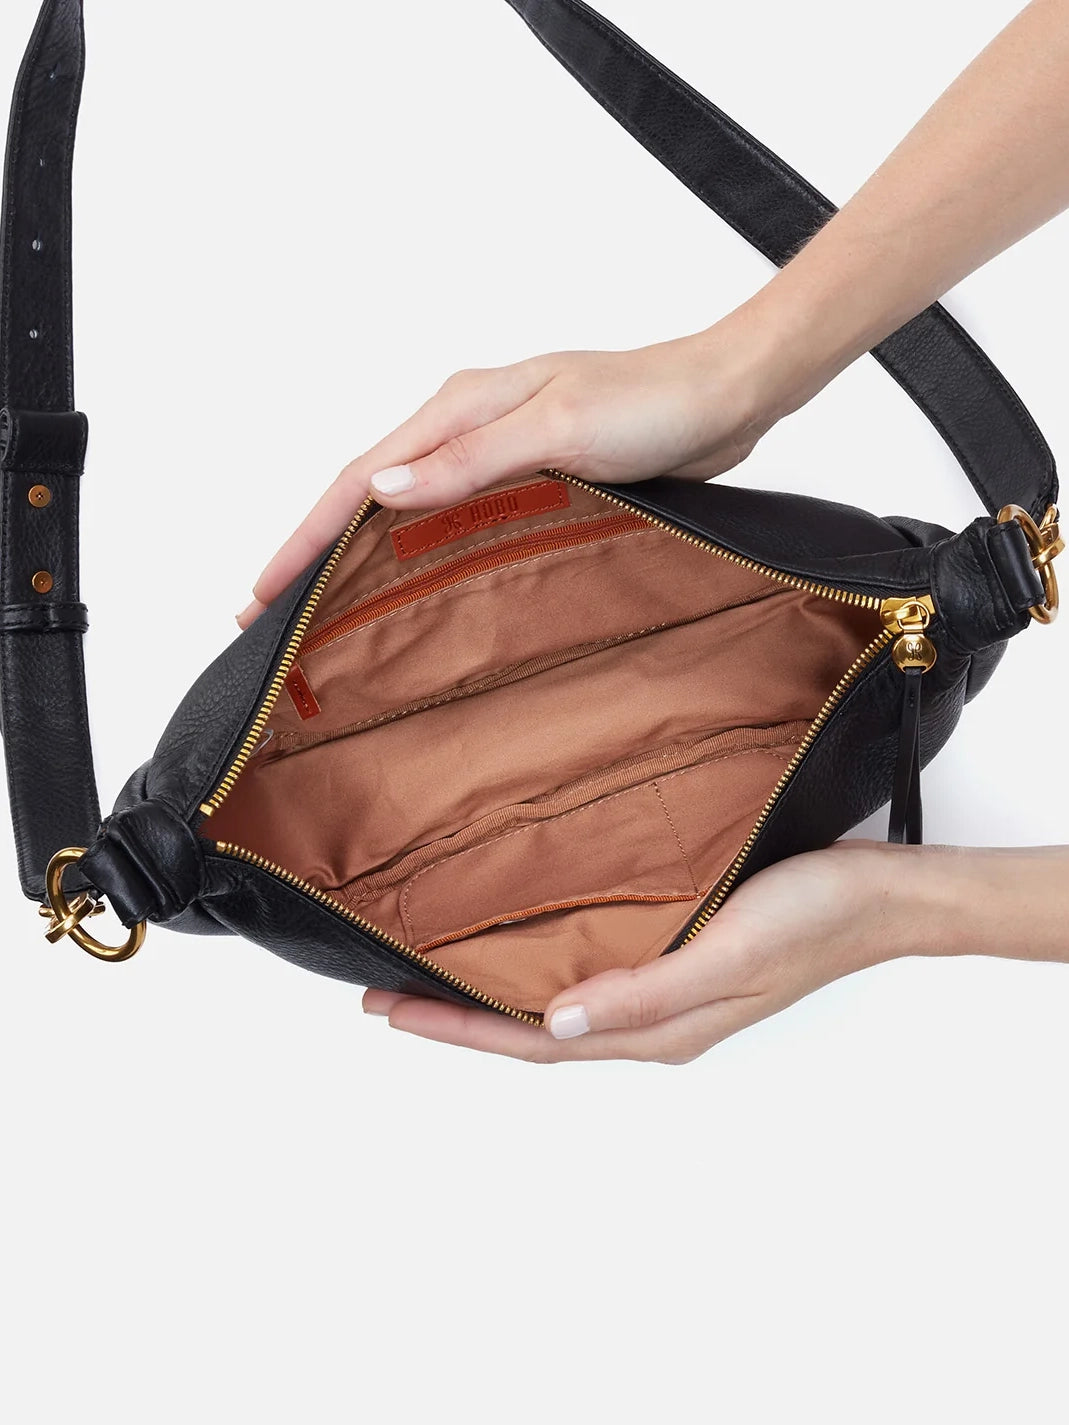 hobo knox sling bag in black pebbled leather